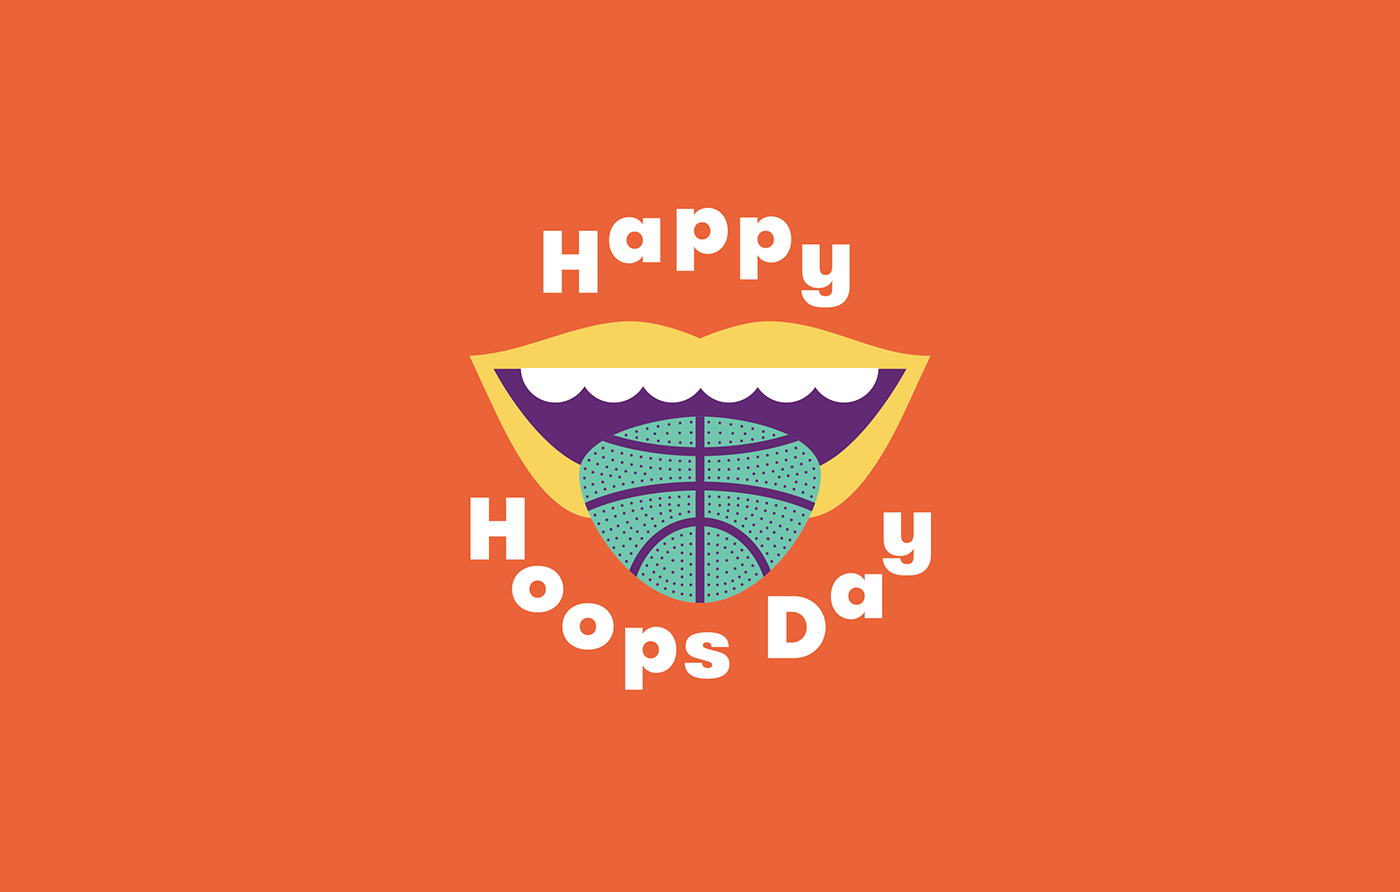 apparel basketball fashion design hoops kiwi pacific island positivity